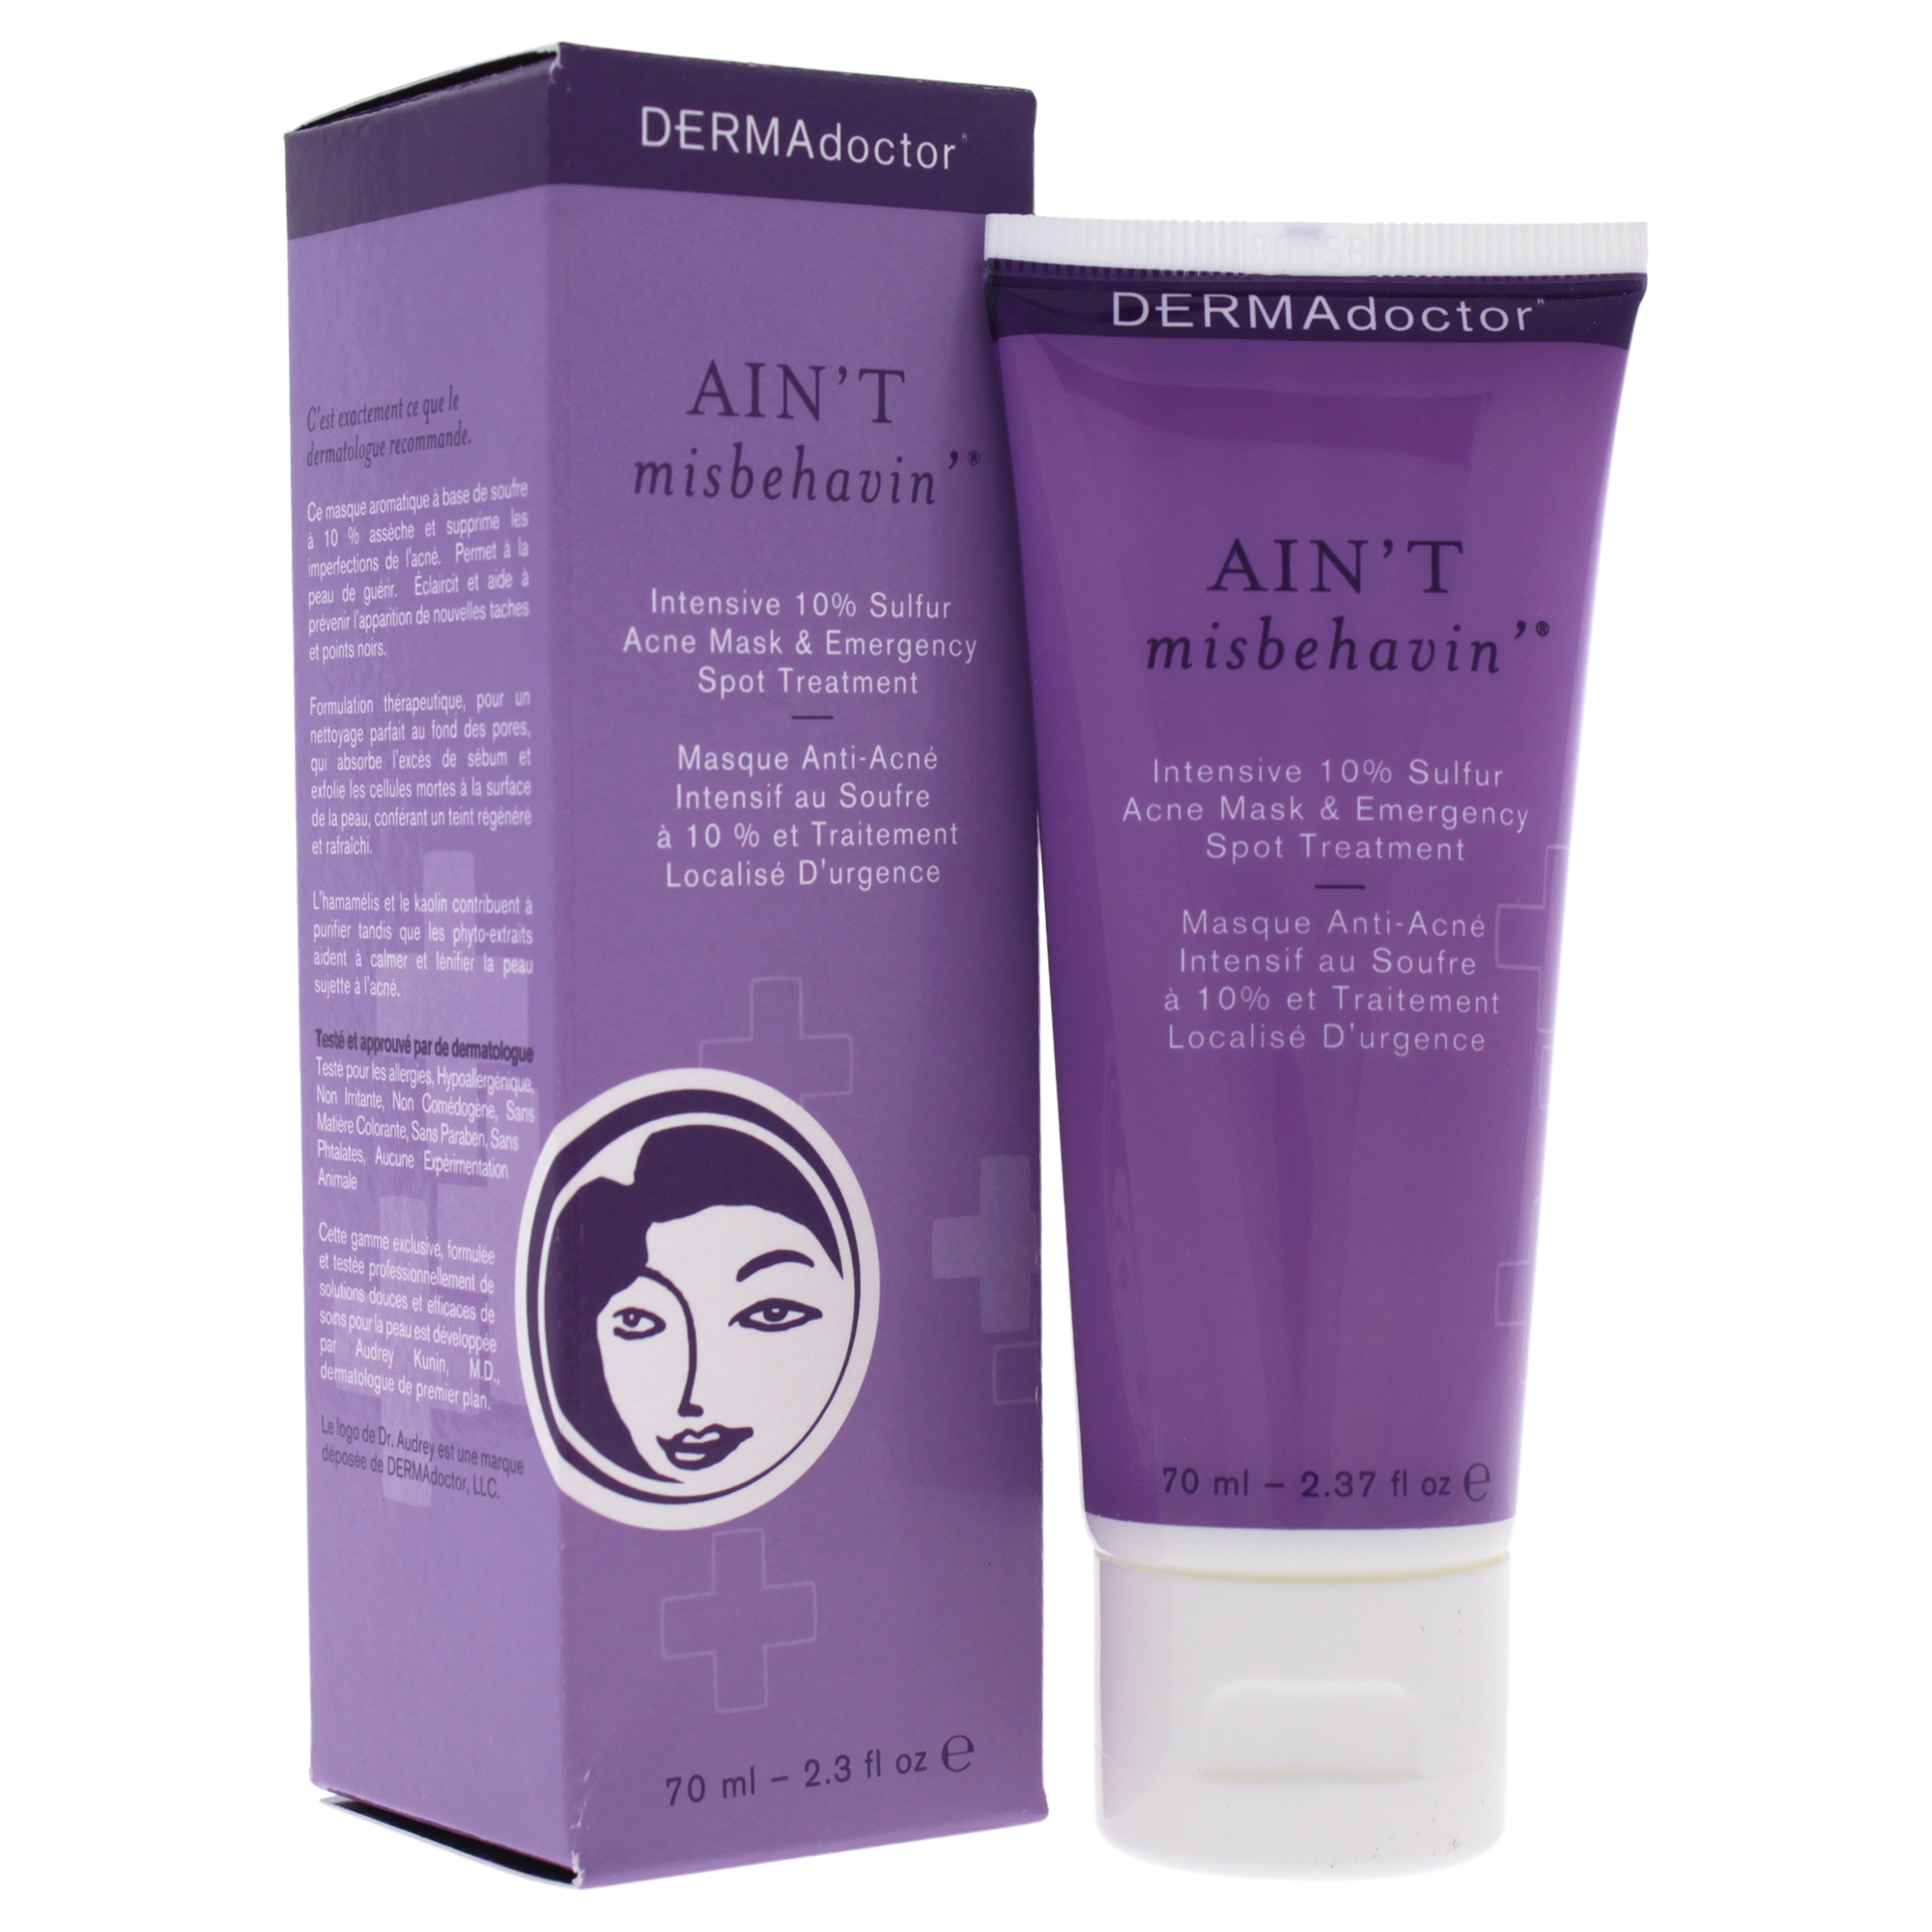 DERMAdoctor Aint Misbehavin Intensive 10% Sulfur Acne Face Mask Treatment - 2.3 oz - image 1 of 2